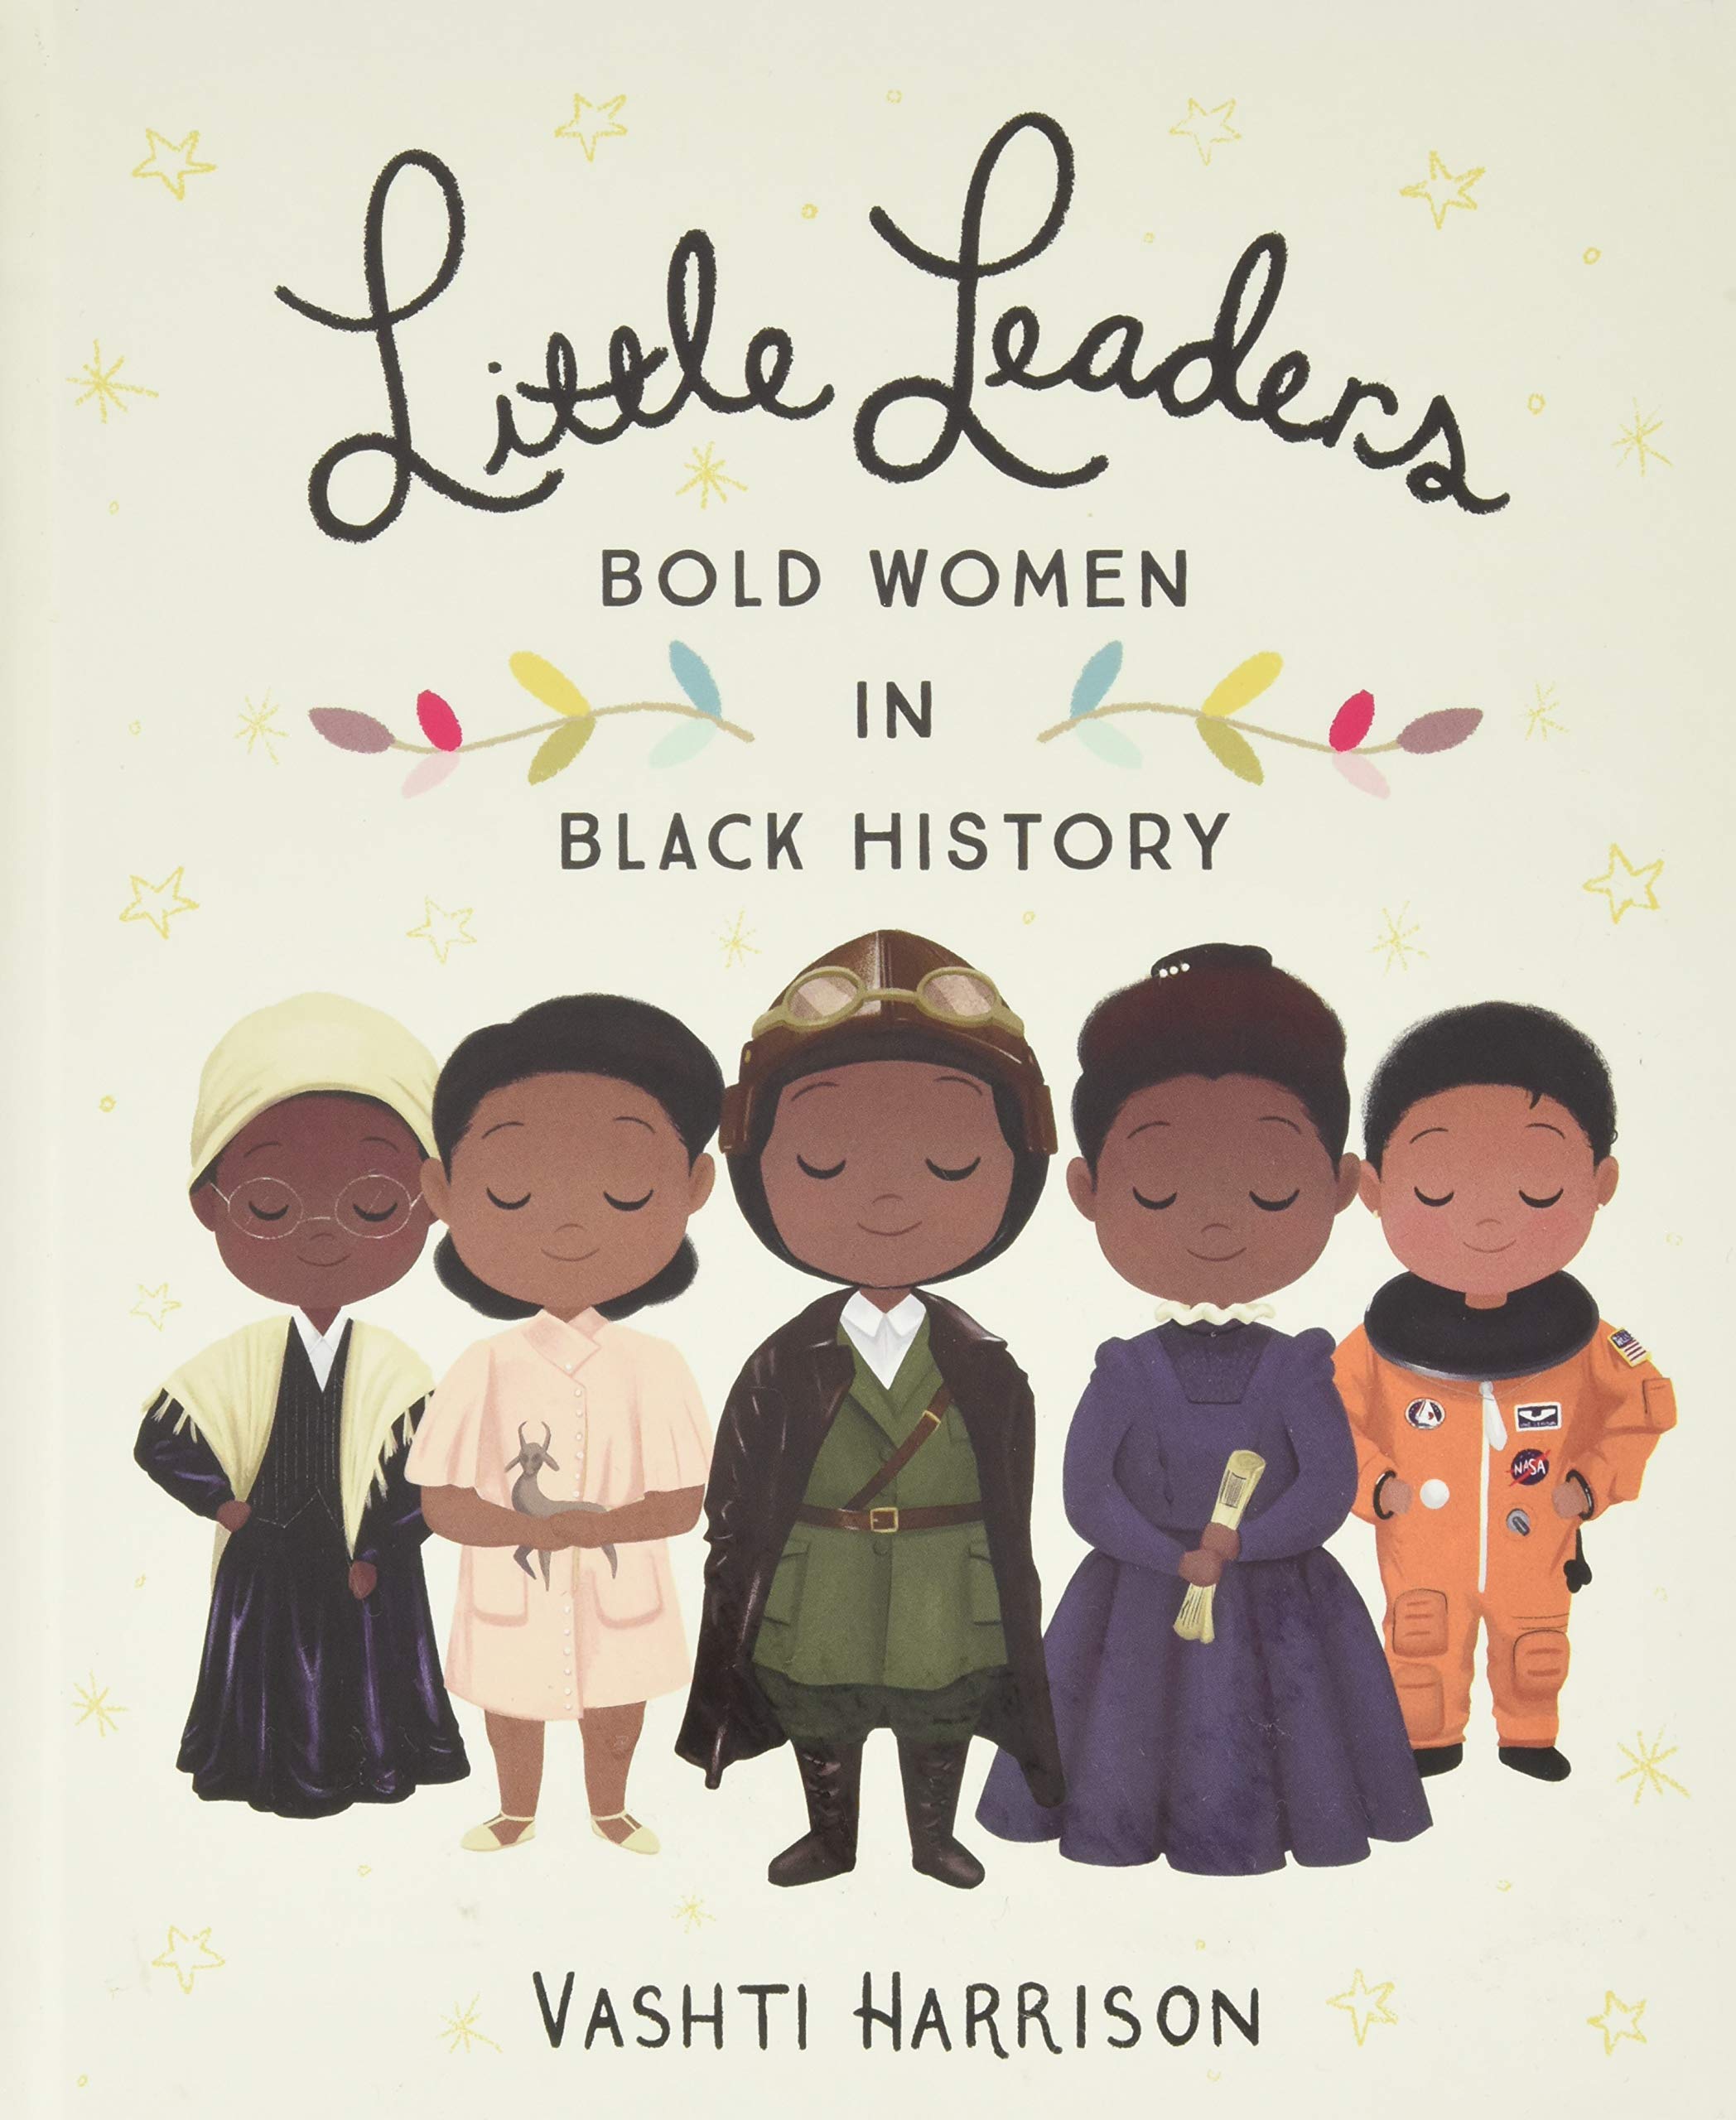 Book cover of Little Leaders by Vashti Harrison